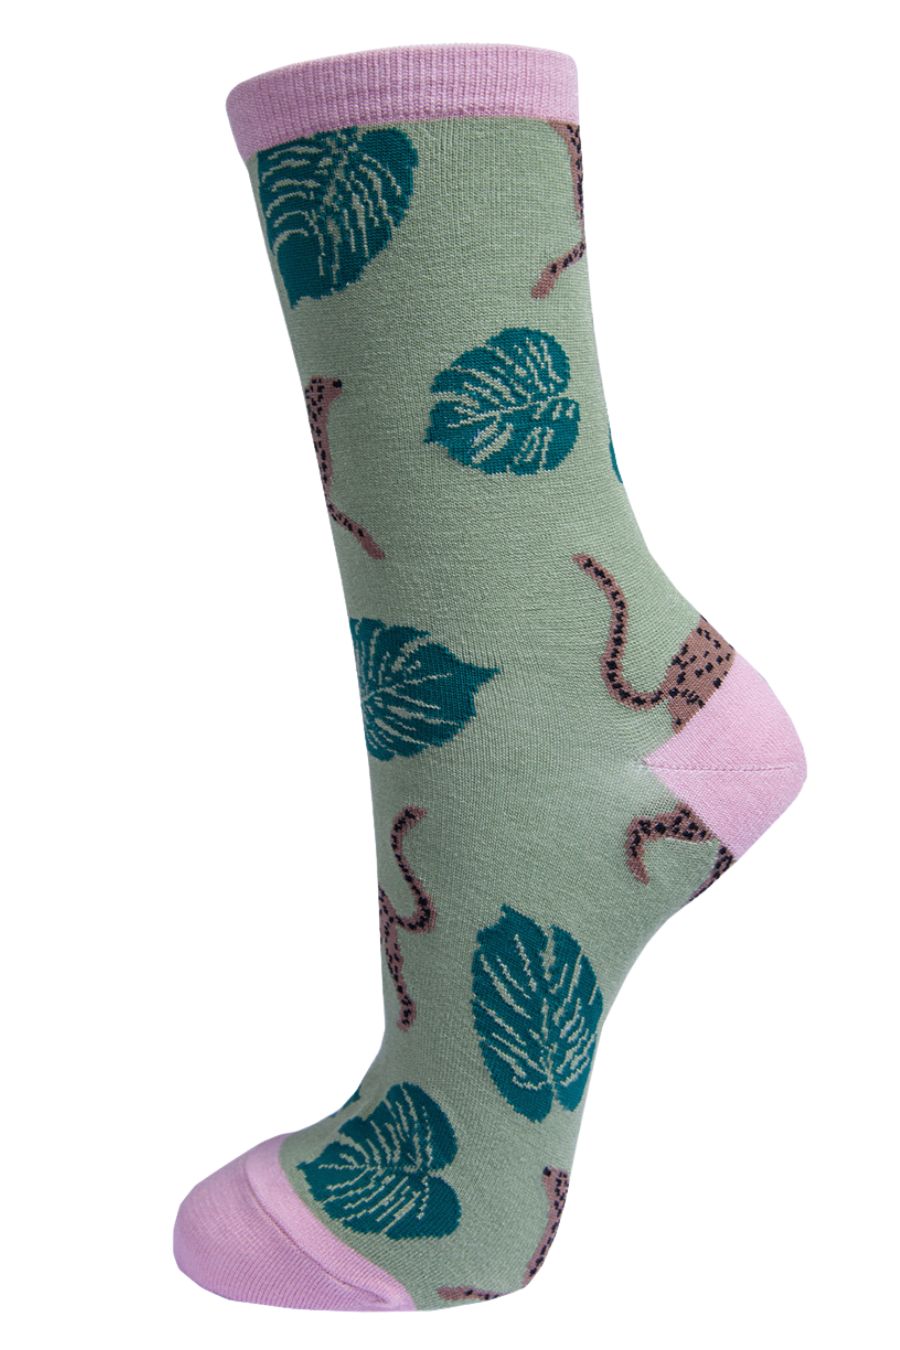 Womens Bamboo Ankle Socks Leopard Print Cheetah Animal Sock Green